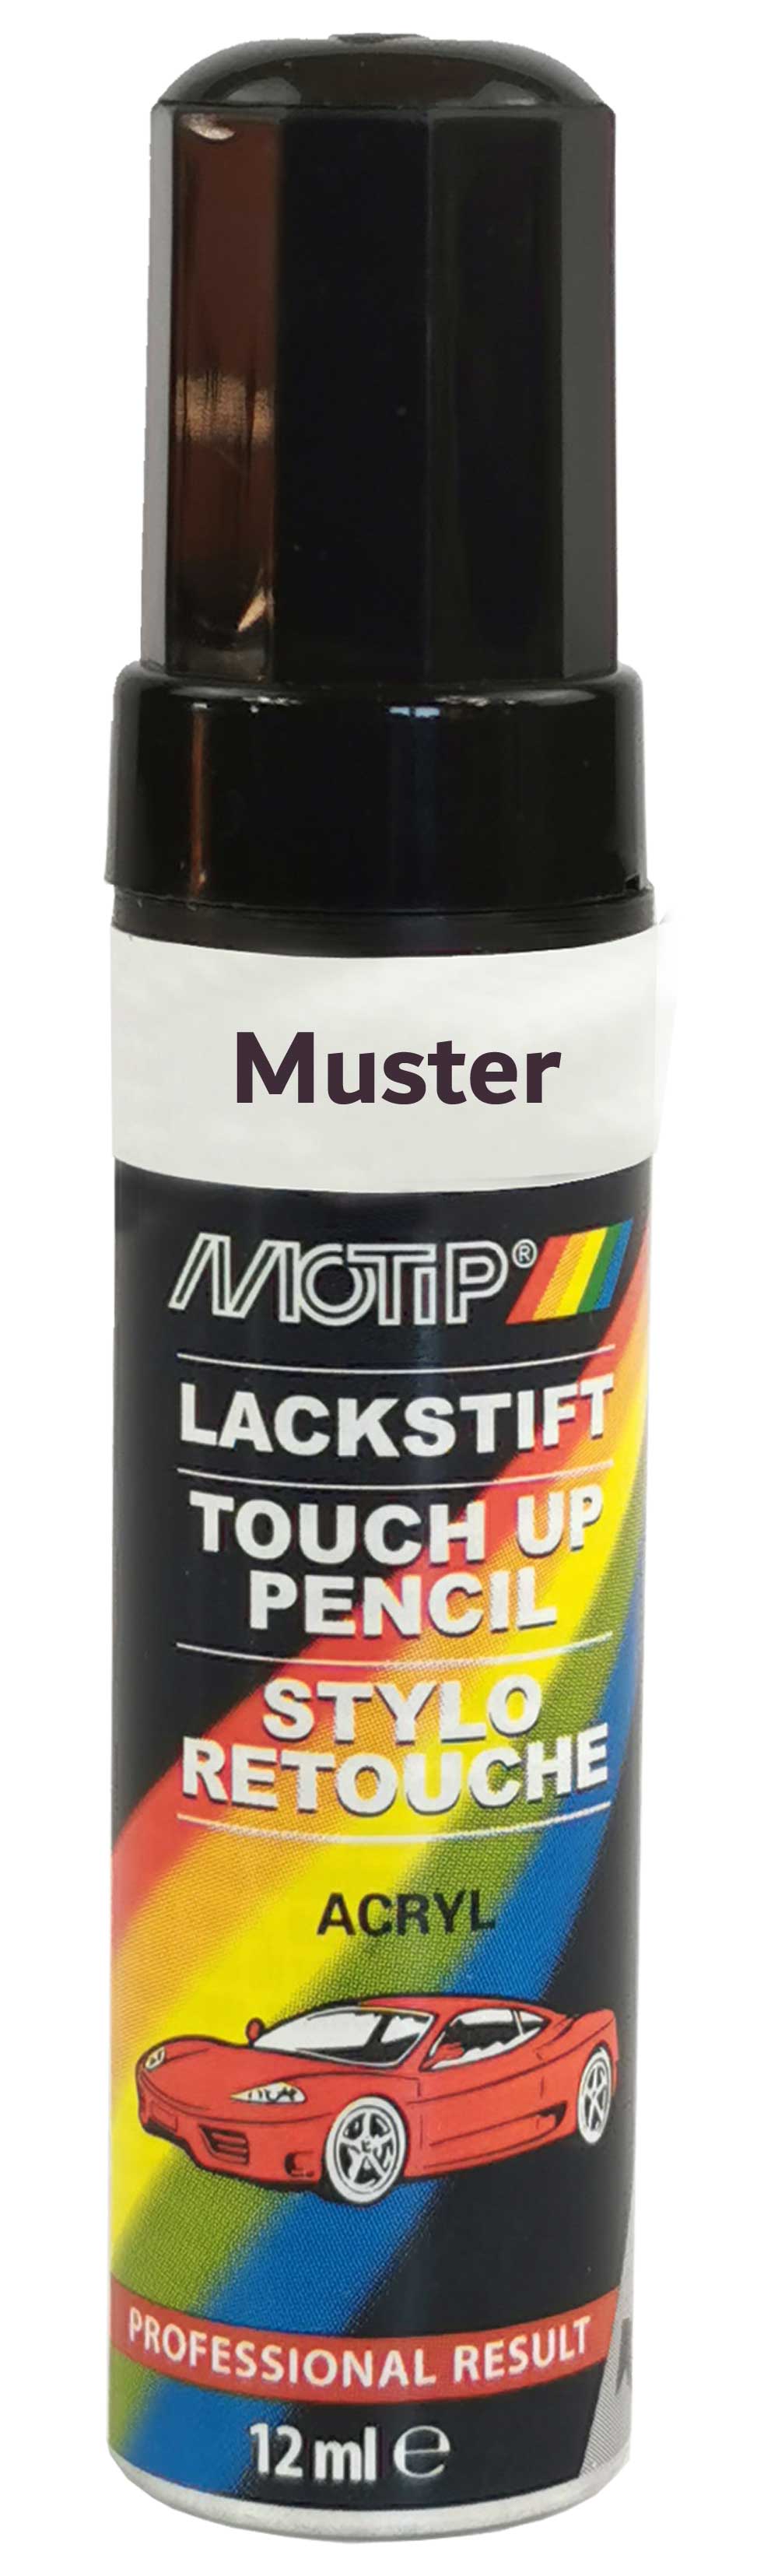 Motip Lack-Stift grau 12ml 951032